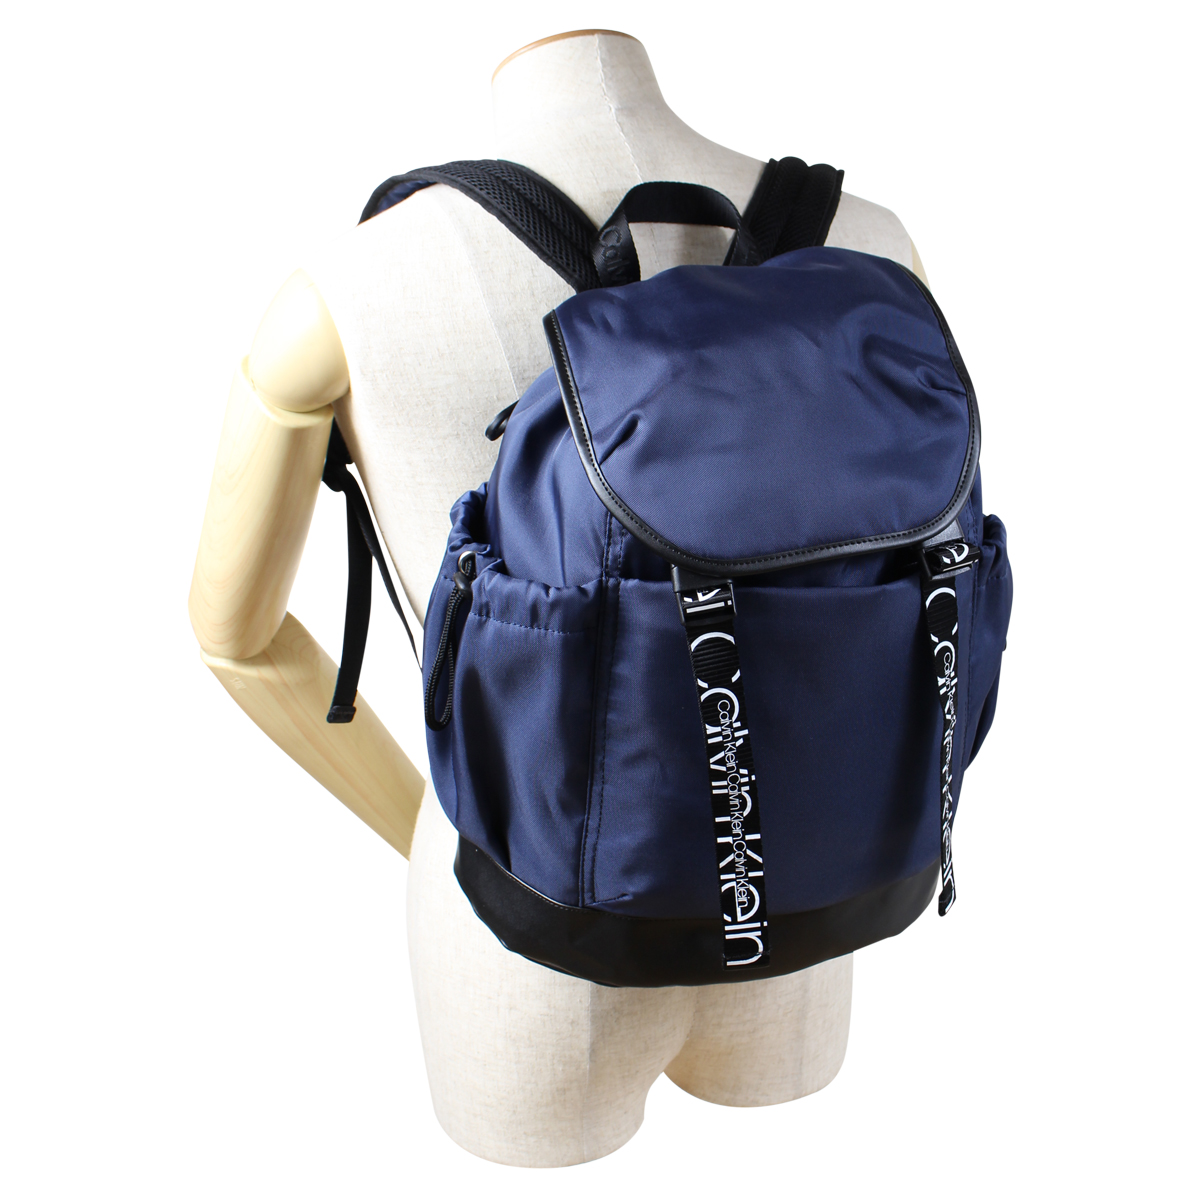 calvin klein blue backpack